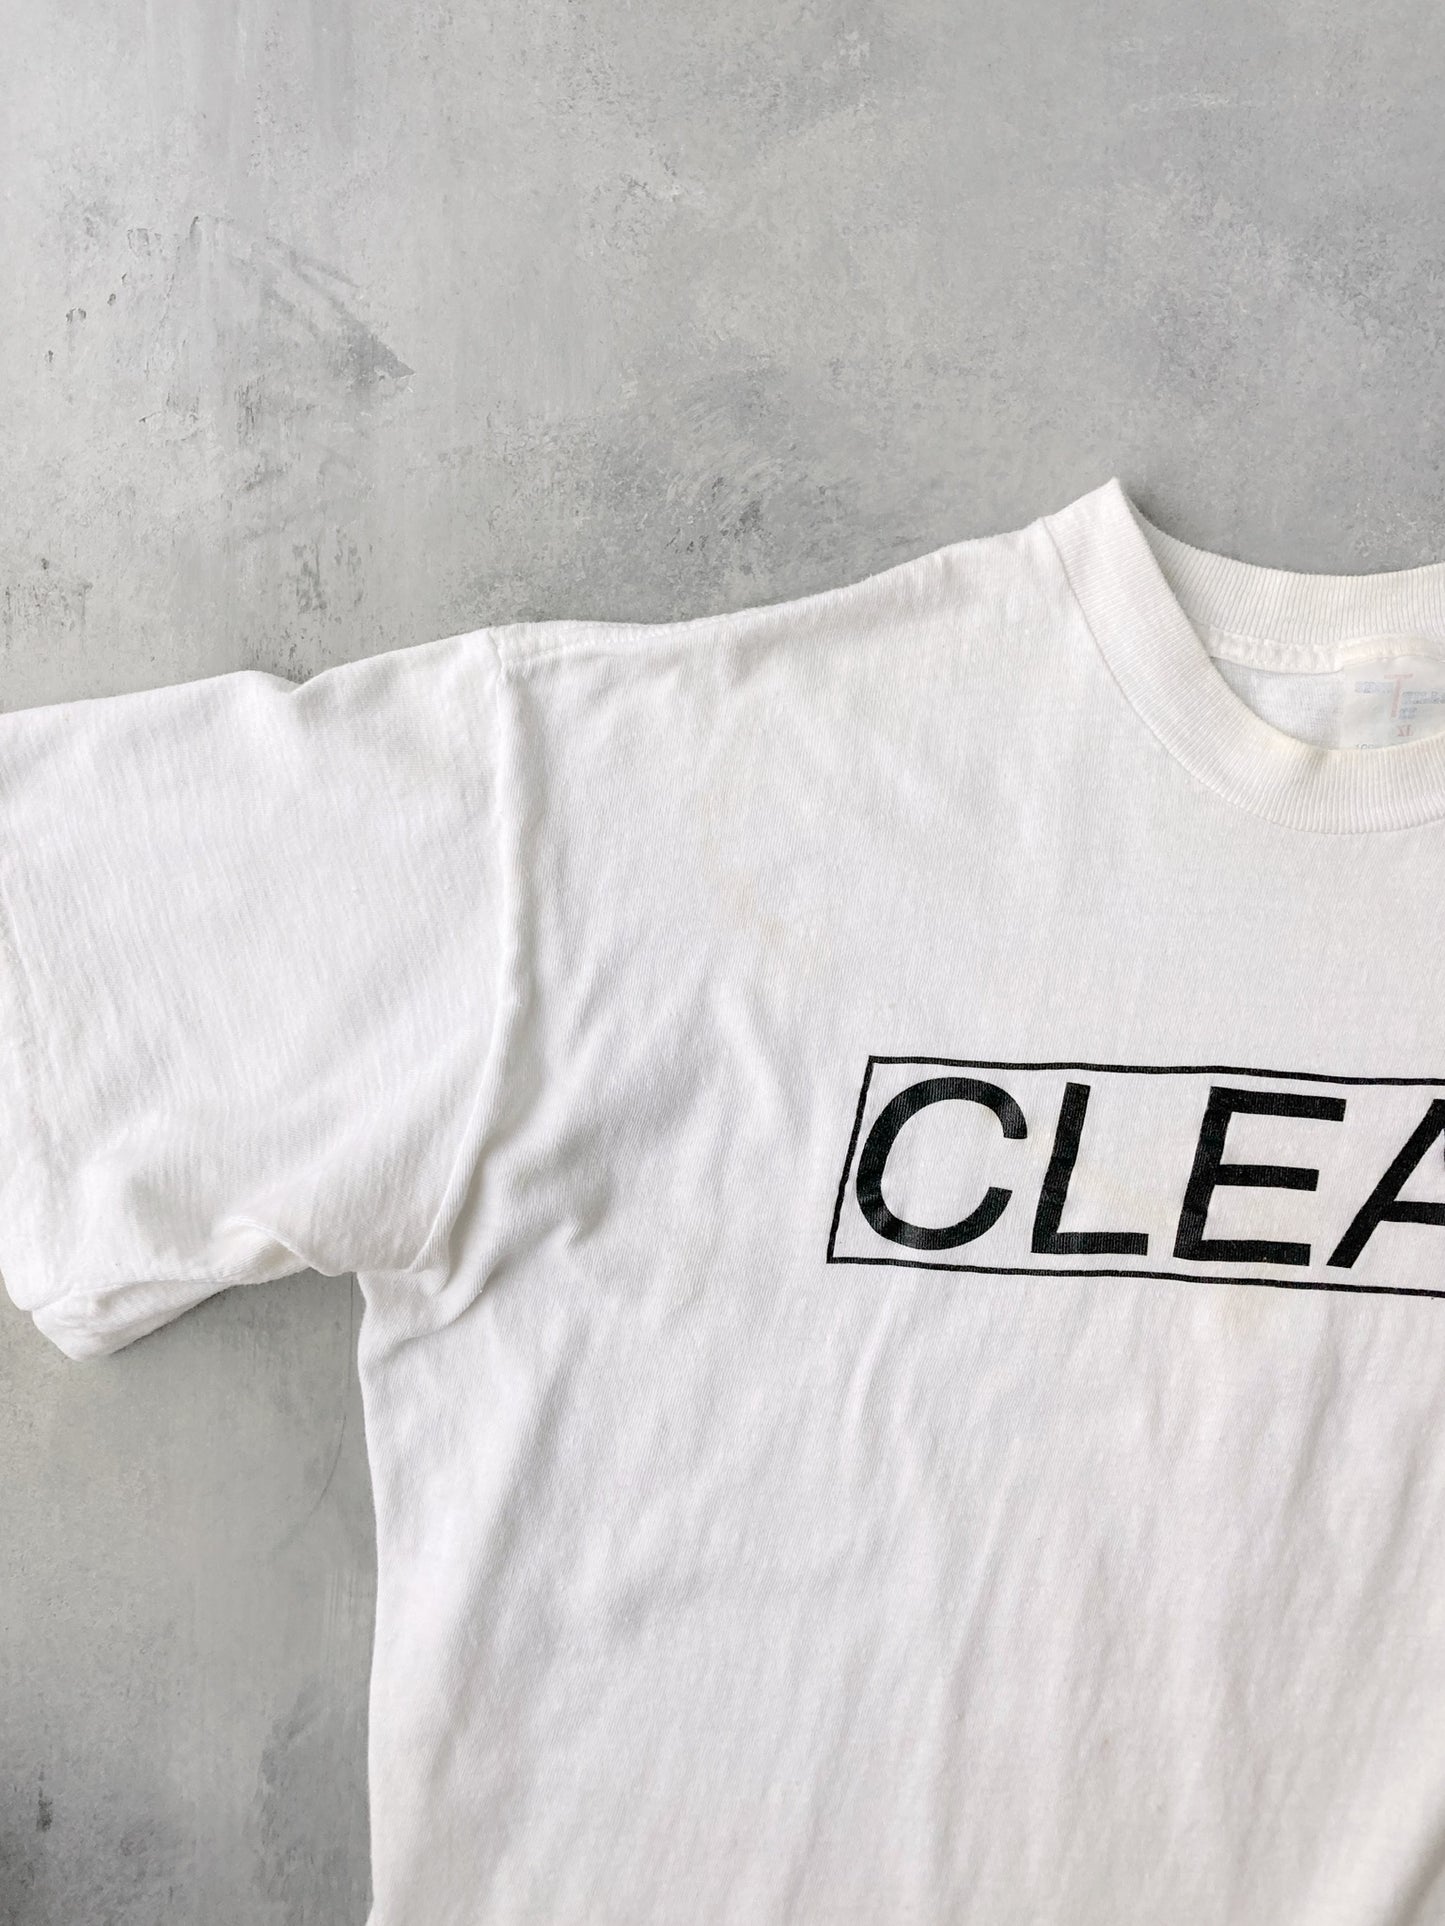 Clean Graphic T-Shirt 90's - XL